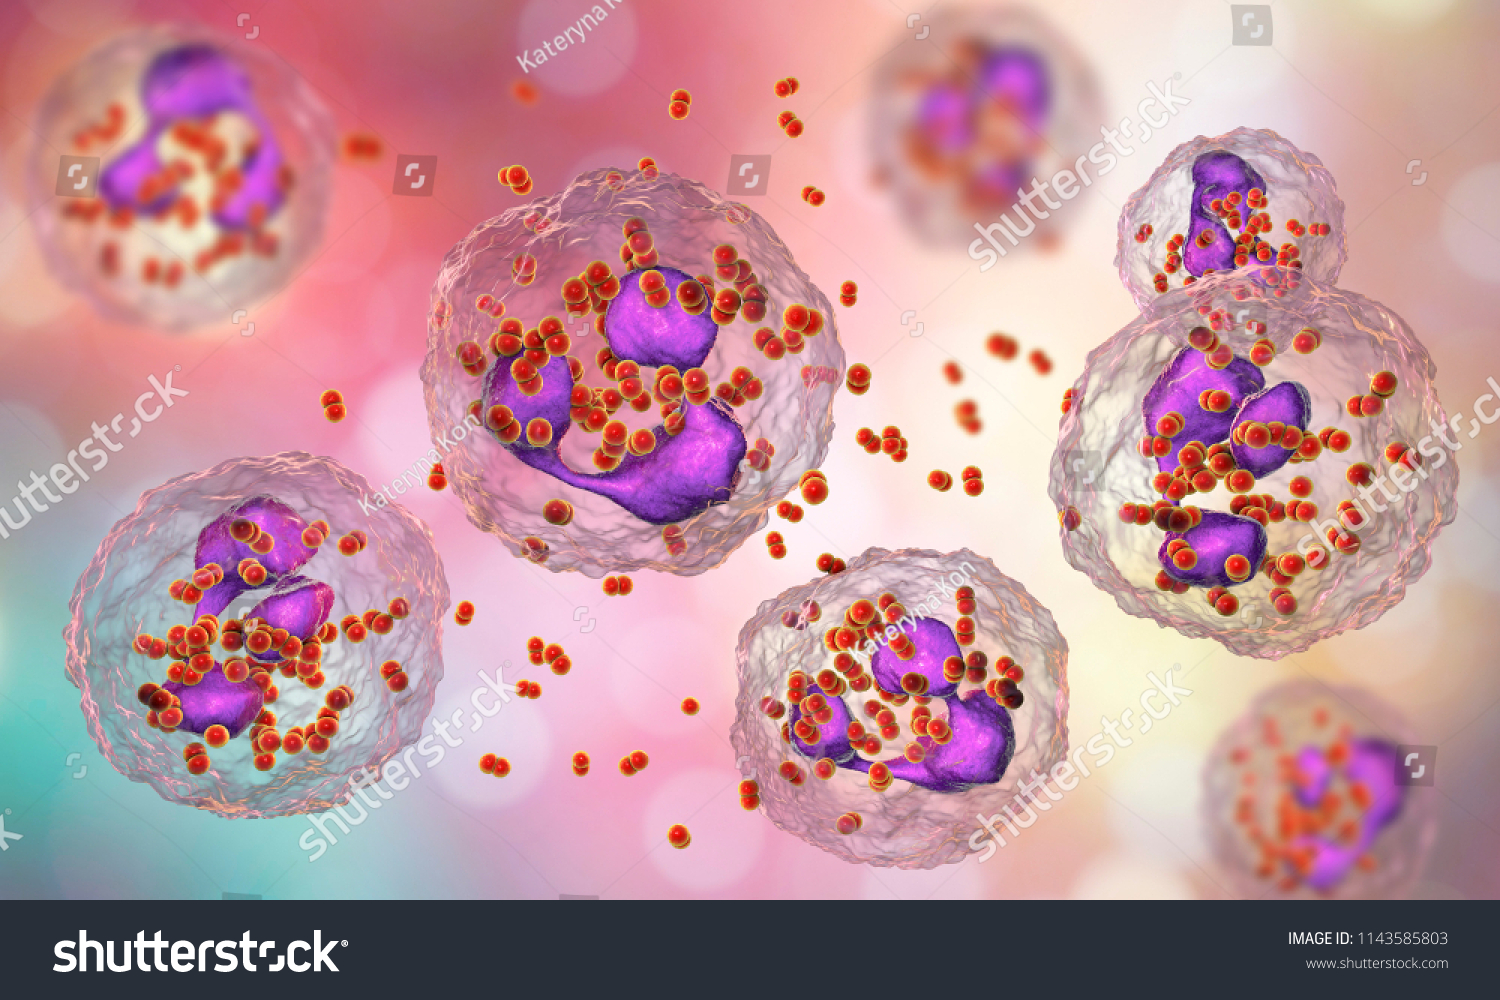 Bacteria Neisseria Gonorrhoeae Inside Phagocytes Gonoccoccus Stock Illustration 1143585803 5460